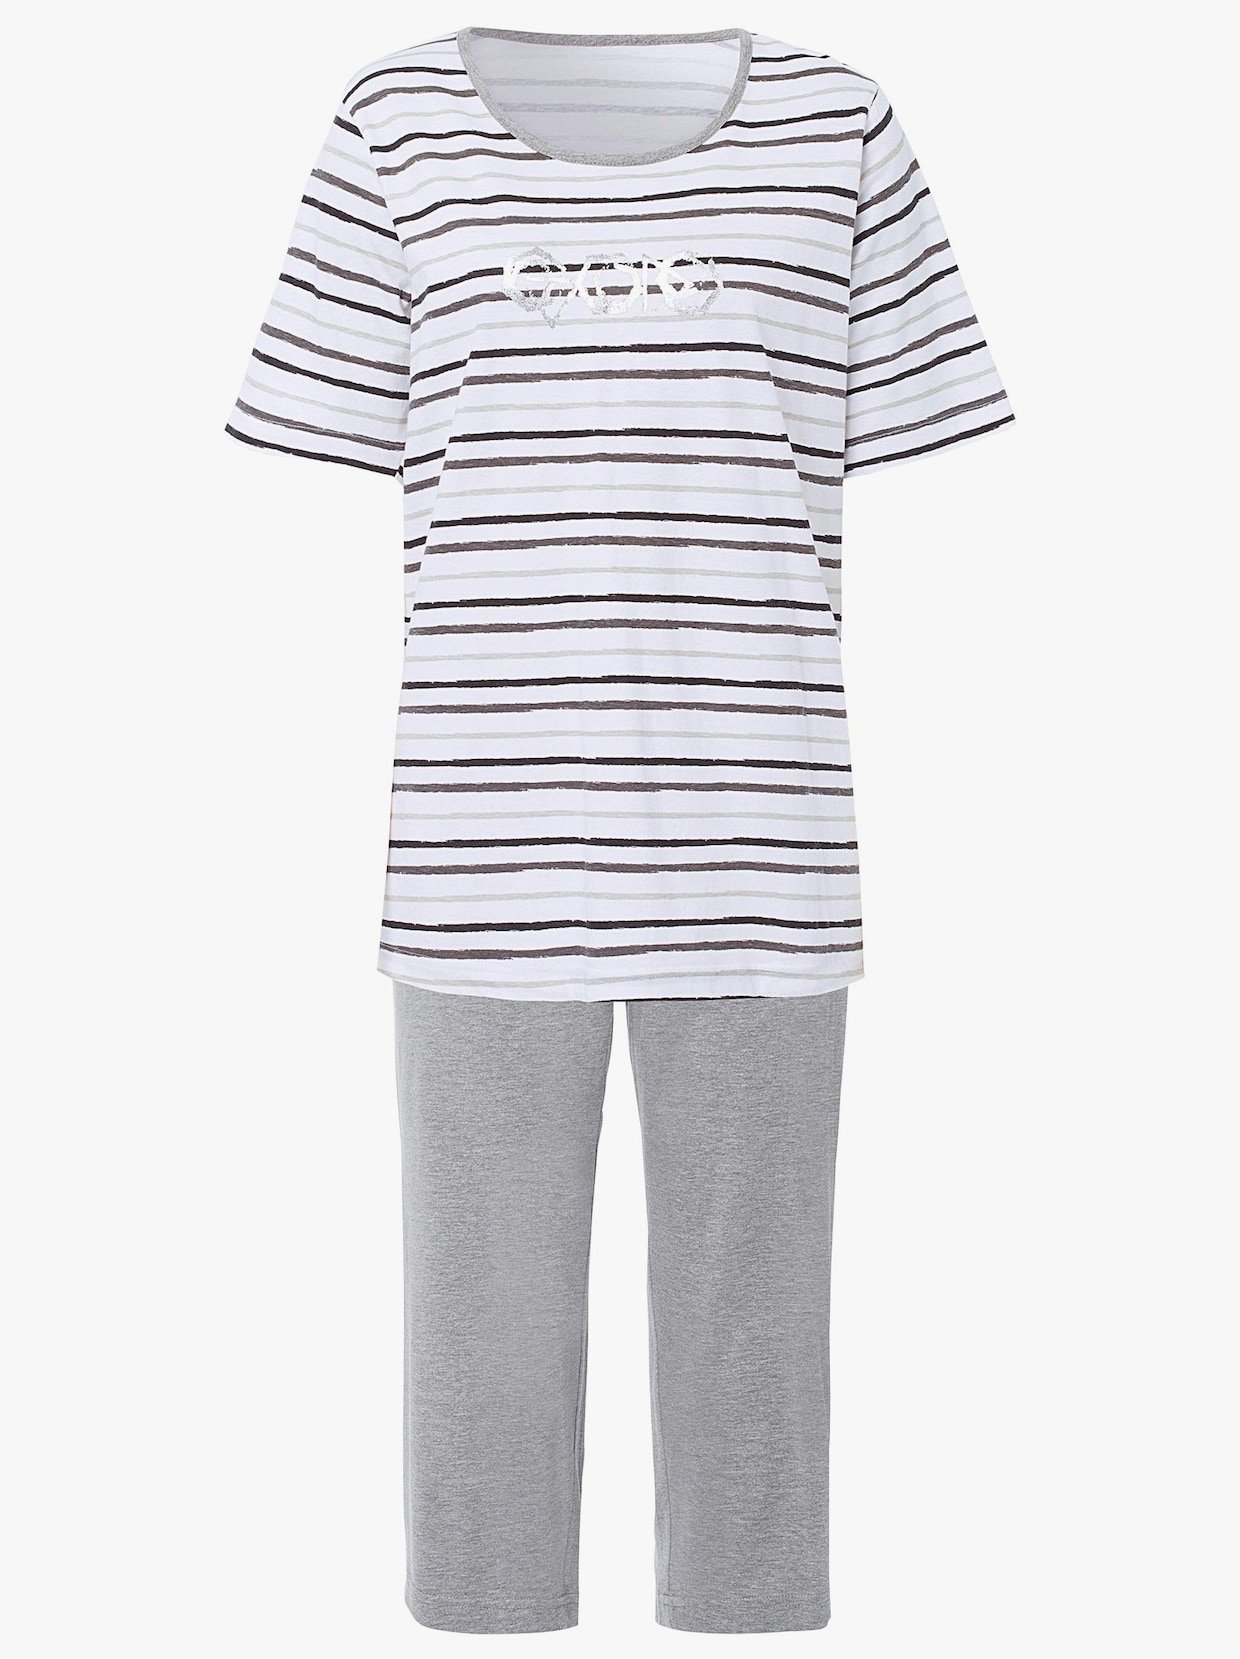 Pyjamas i caprimodell - grå, tryckt